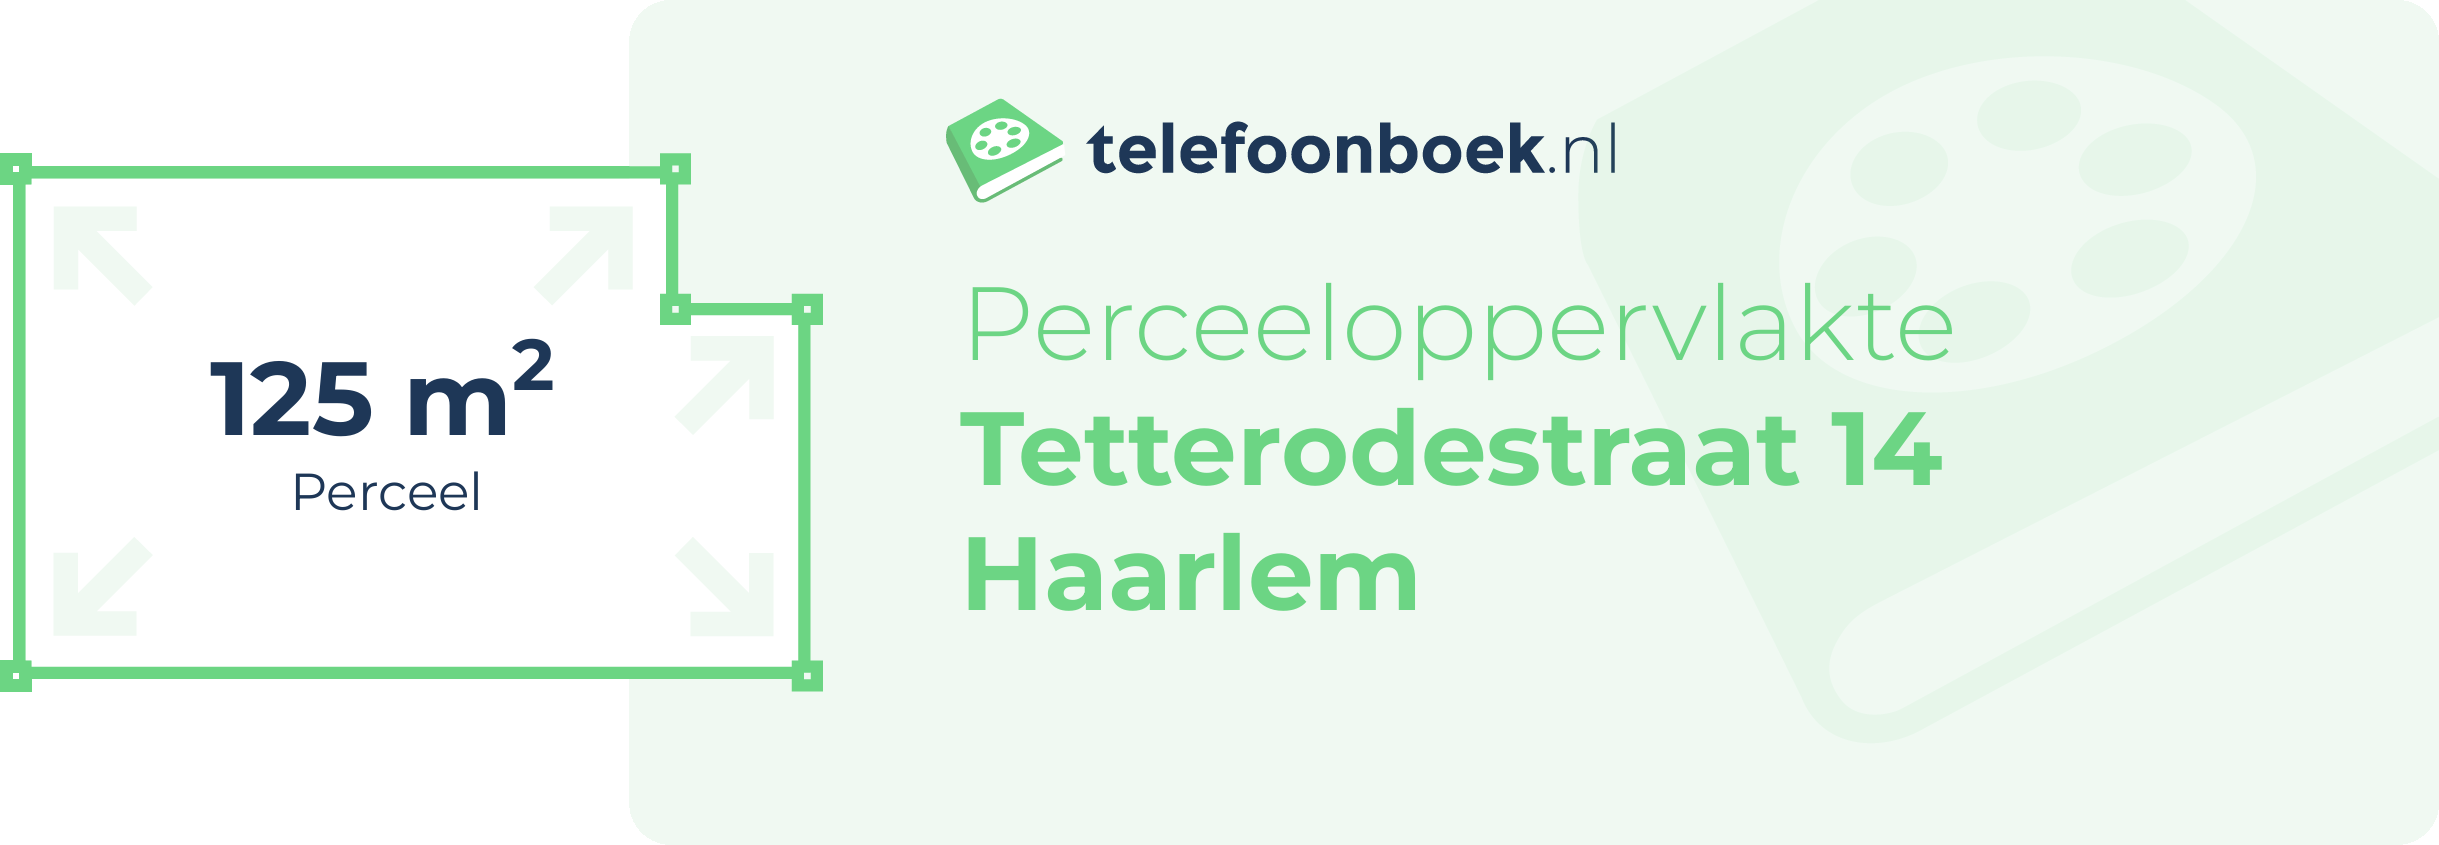 Perceeloppervlakte Tetterodestraat 14 Haarlem